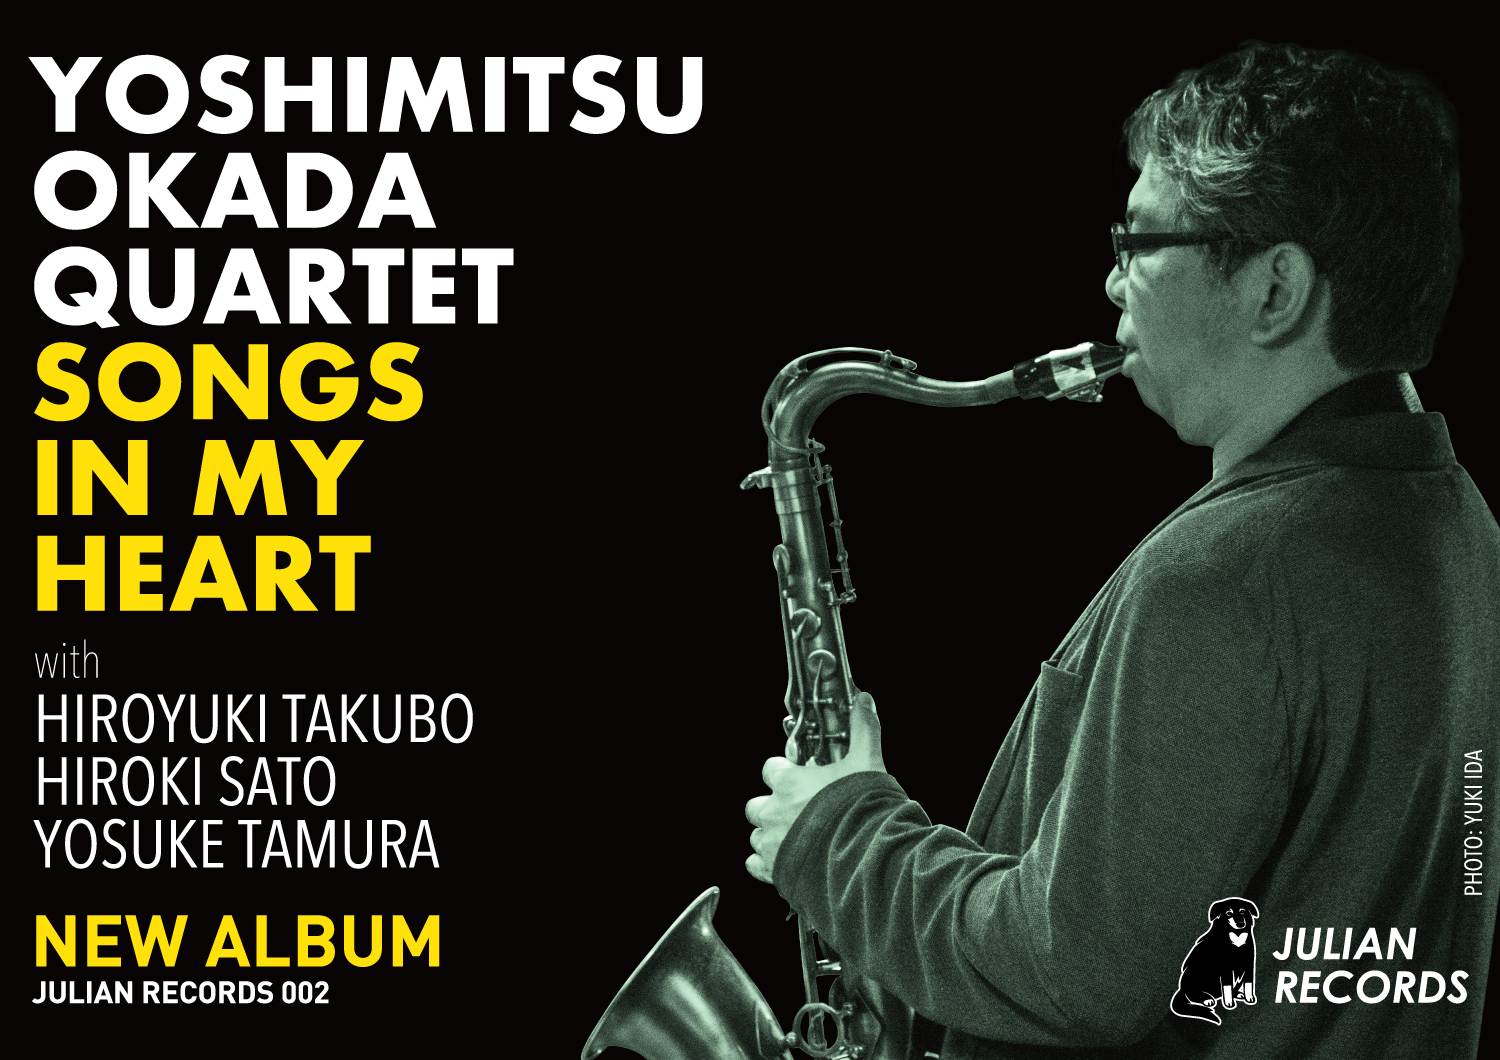 SONGS IN MY HEART - Yoshimitsu Okada Quartet